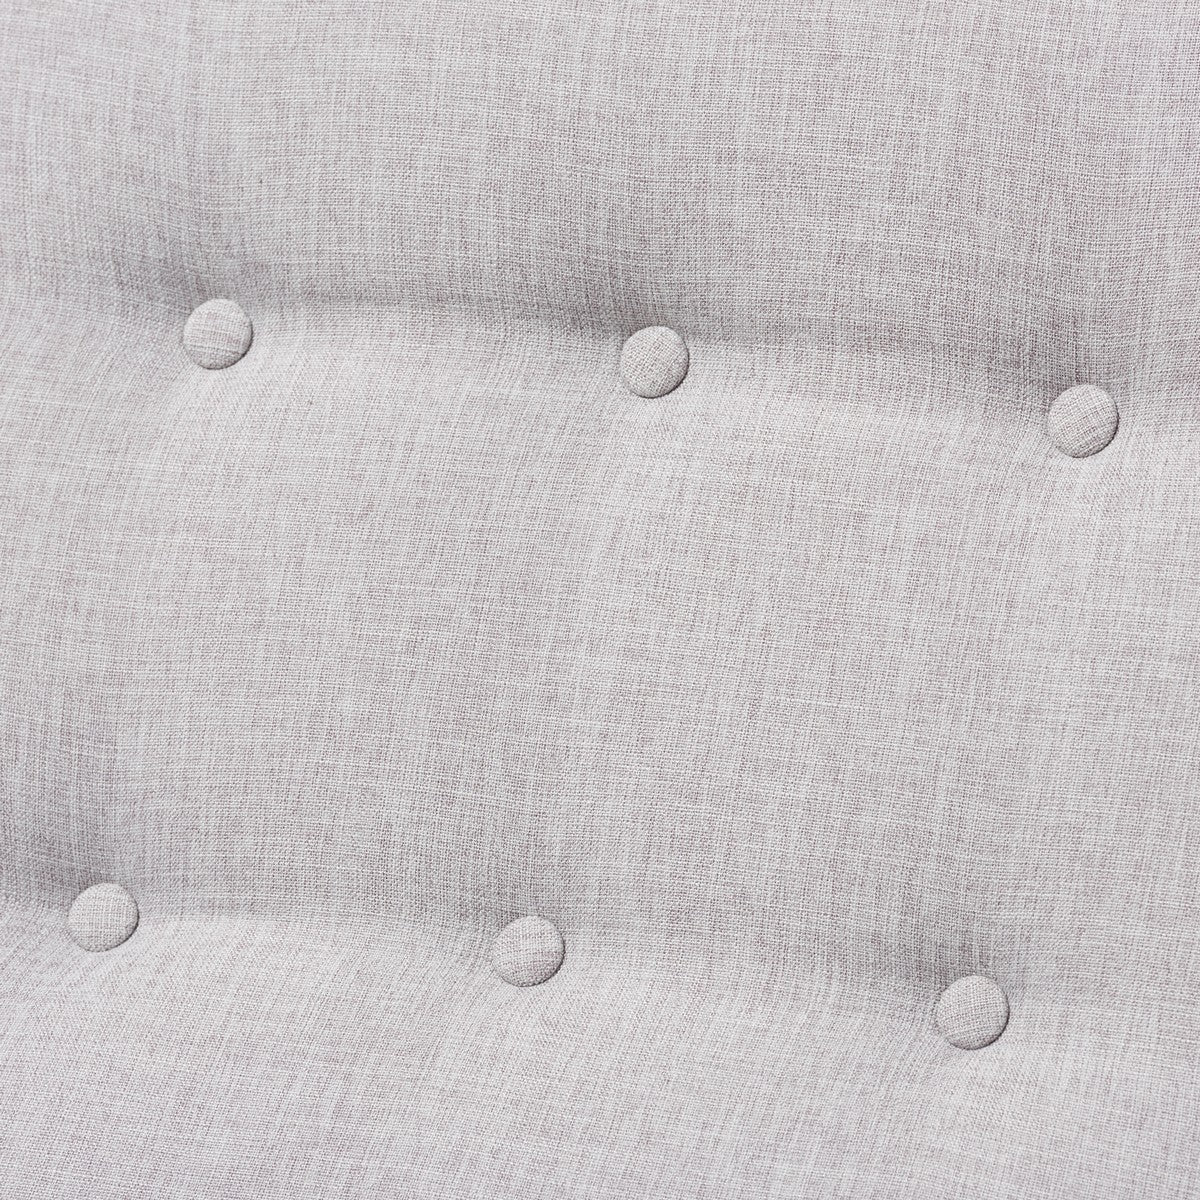 Baxton Studio Marlena Mid-Century Modern Greyish Beige Fabric Upholstered Whitewash Wood Rocking Chair